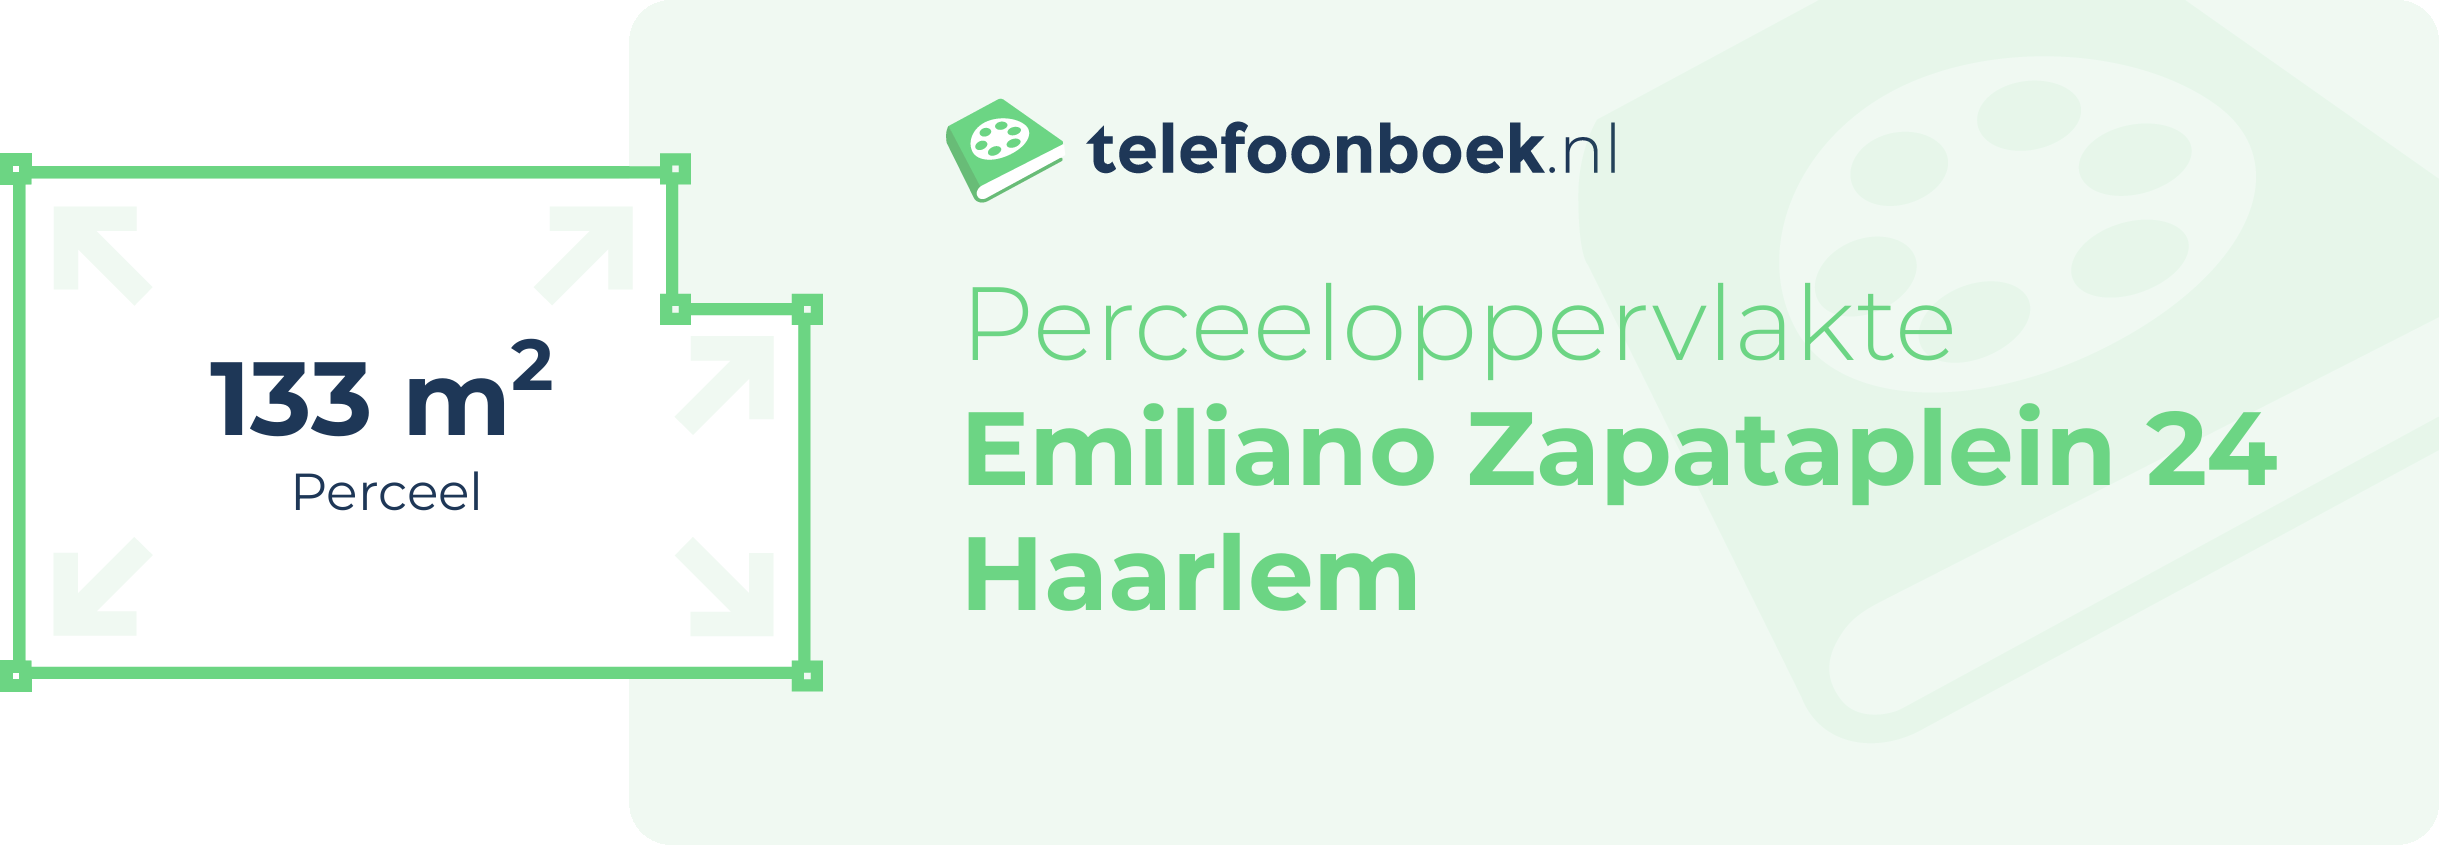 Perceeloppervlakte Emiliano Zapataplein 24 Haarlem